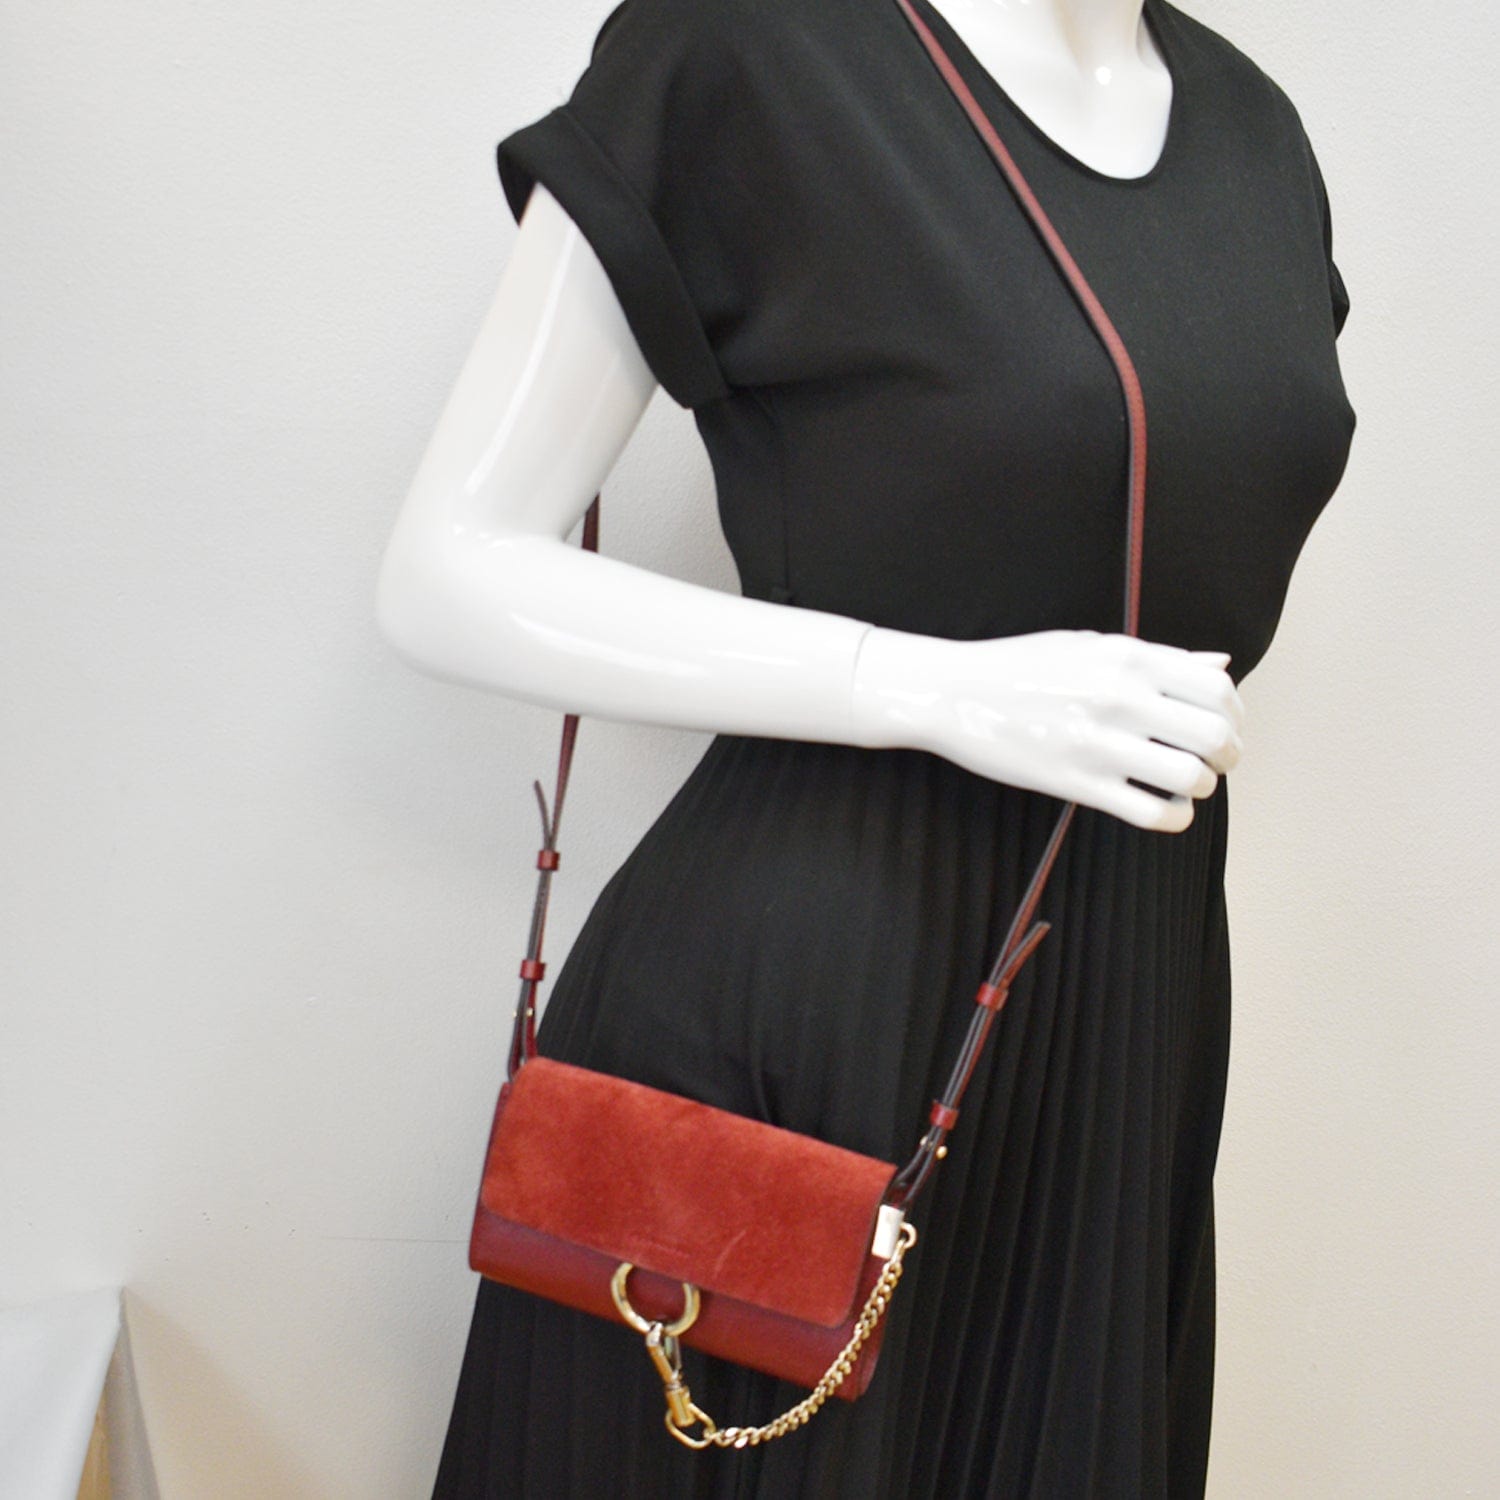 Chloé Faye Leather Handbag